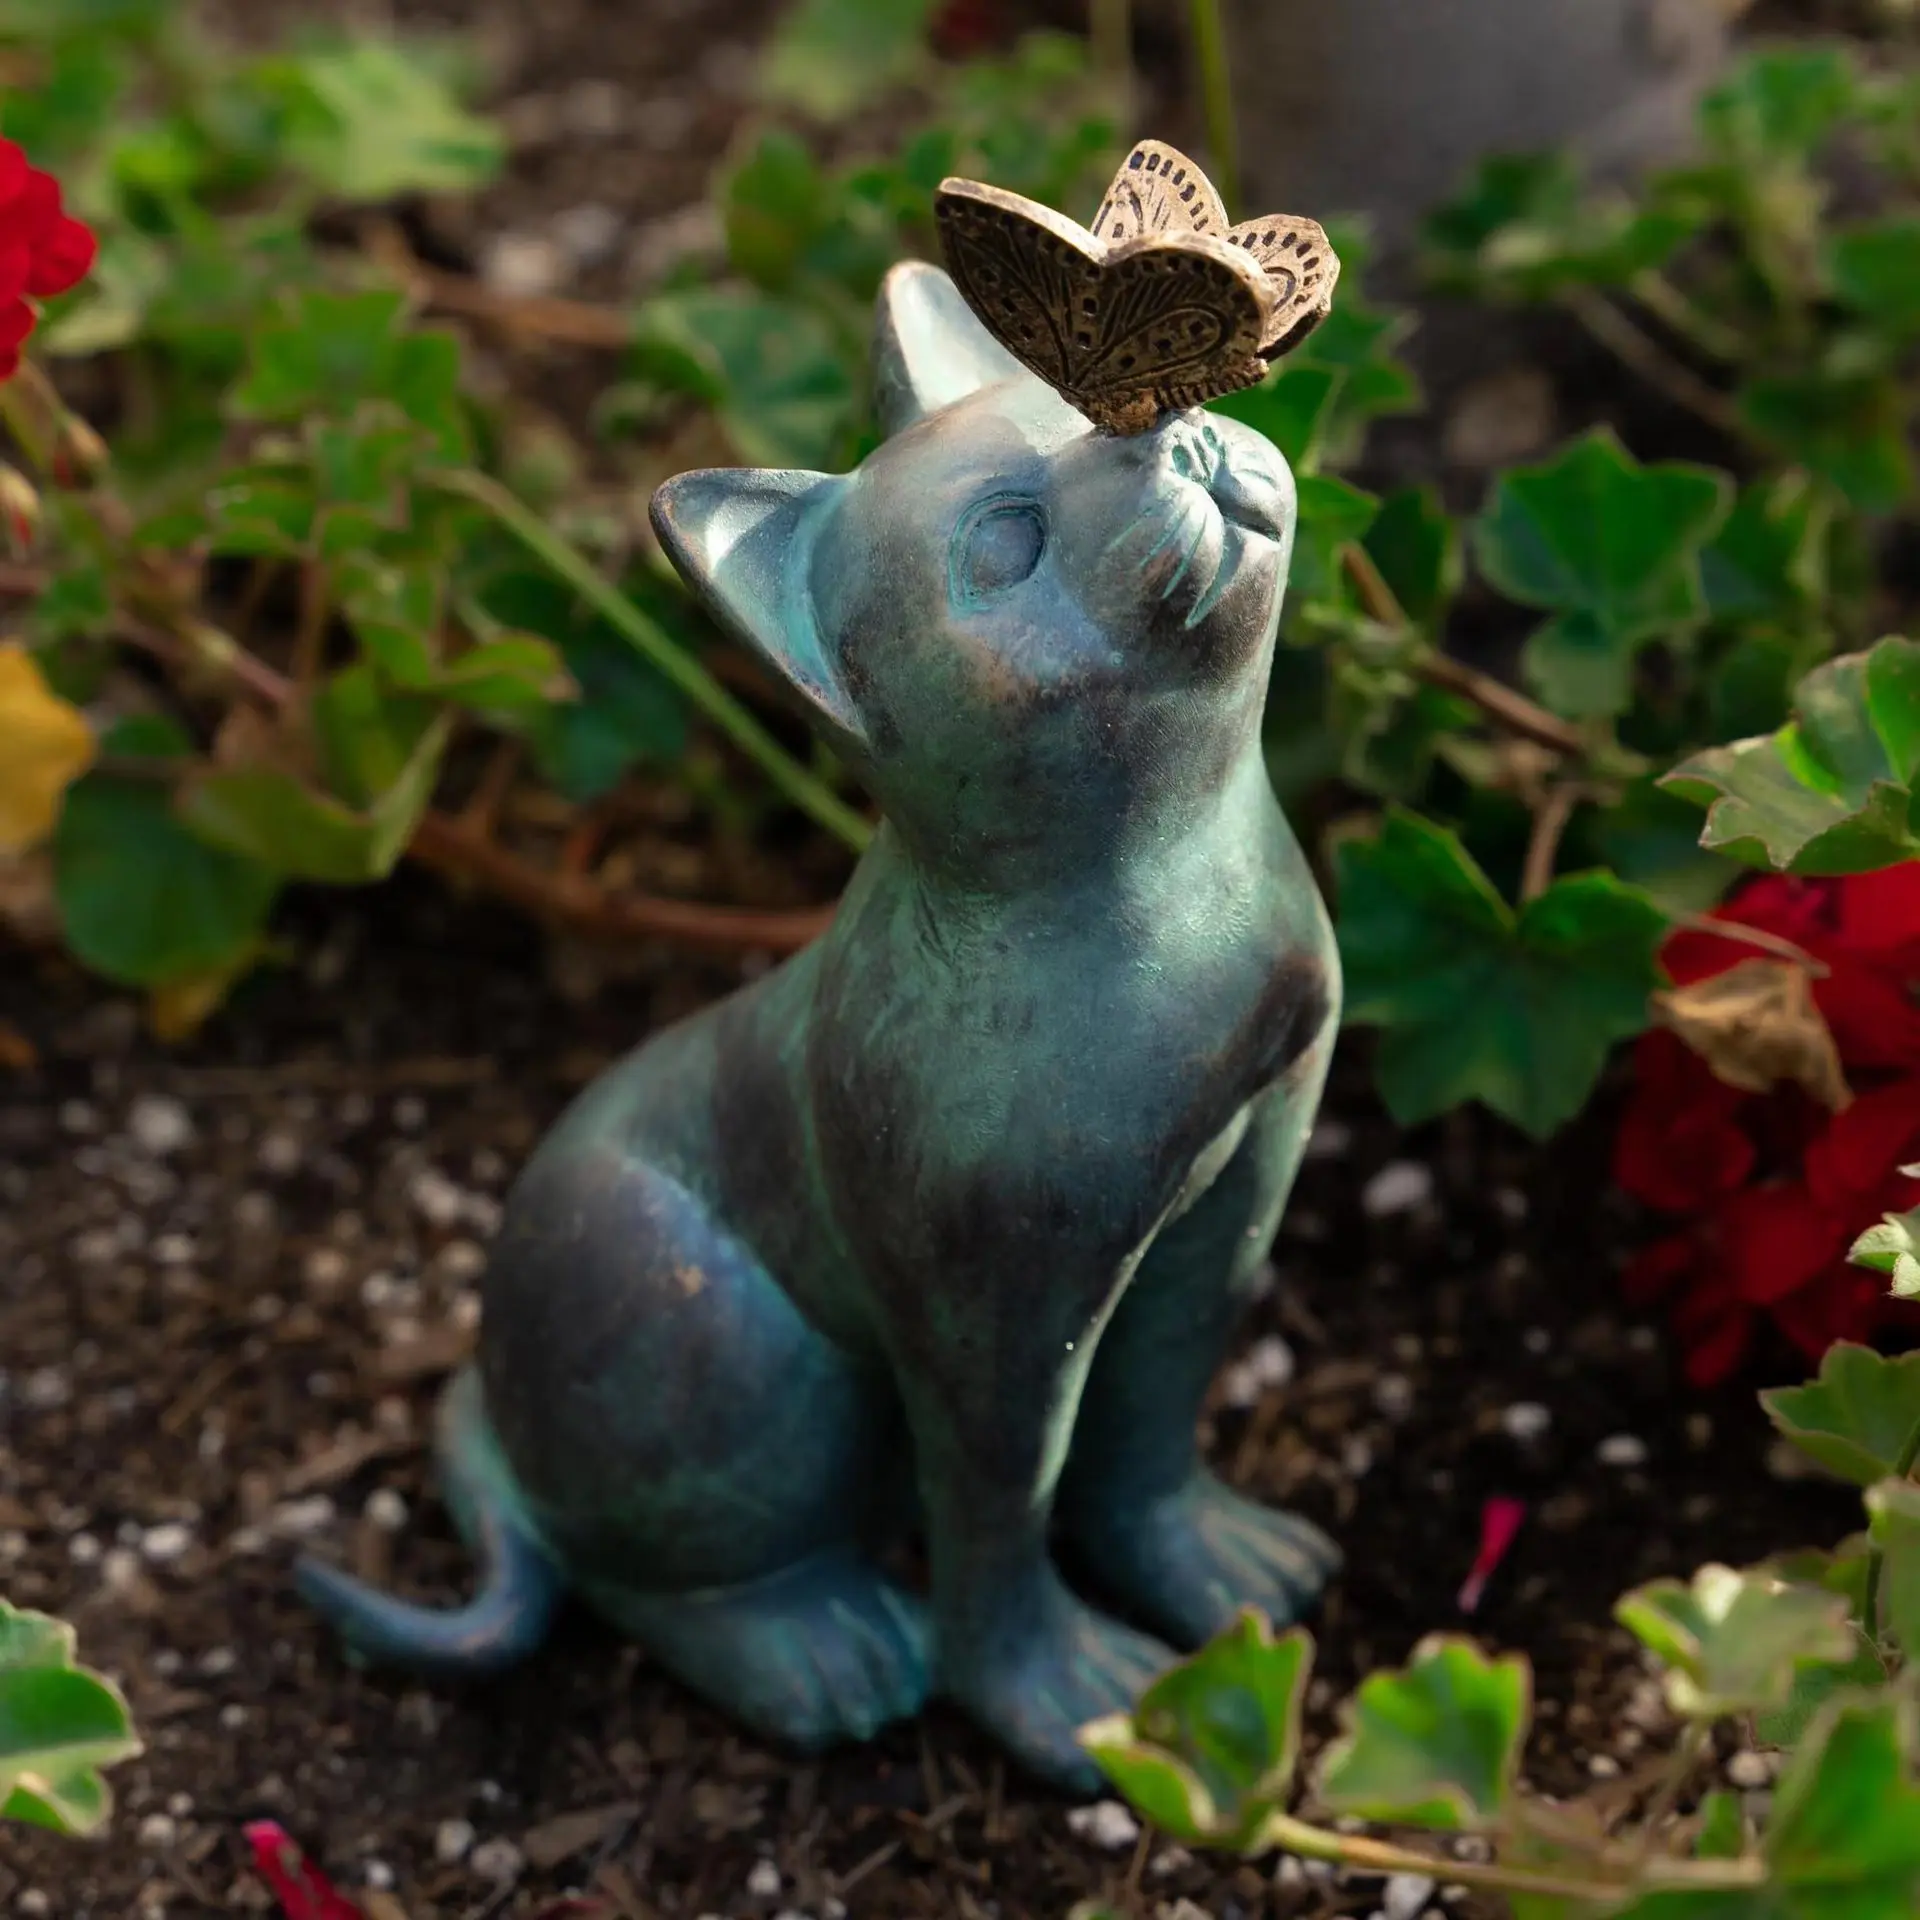 Garden Outdoor Figurines Curious Cat With  Sculptures Resin Crafts Garden Statue - $185.23